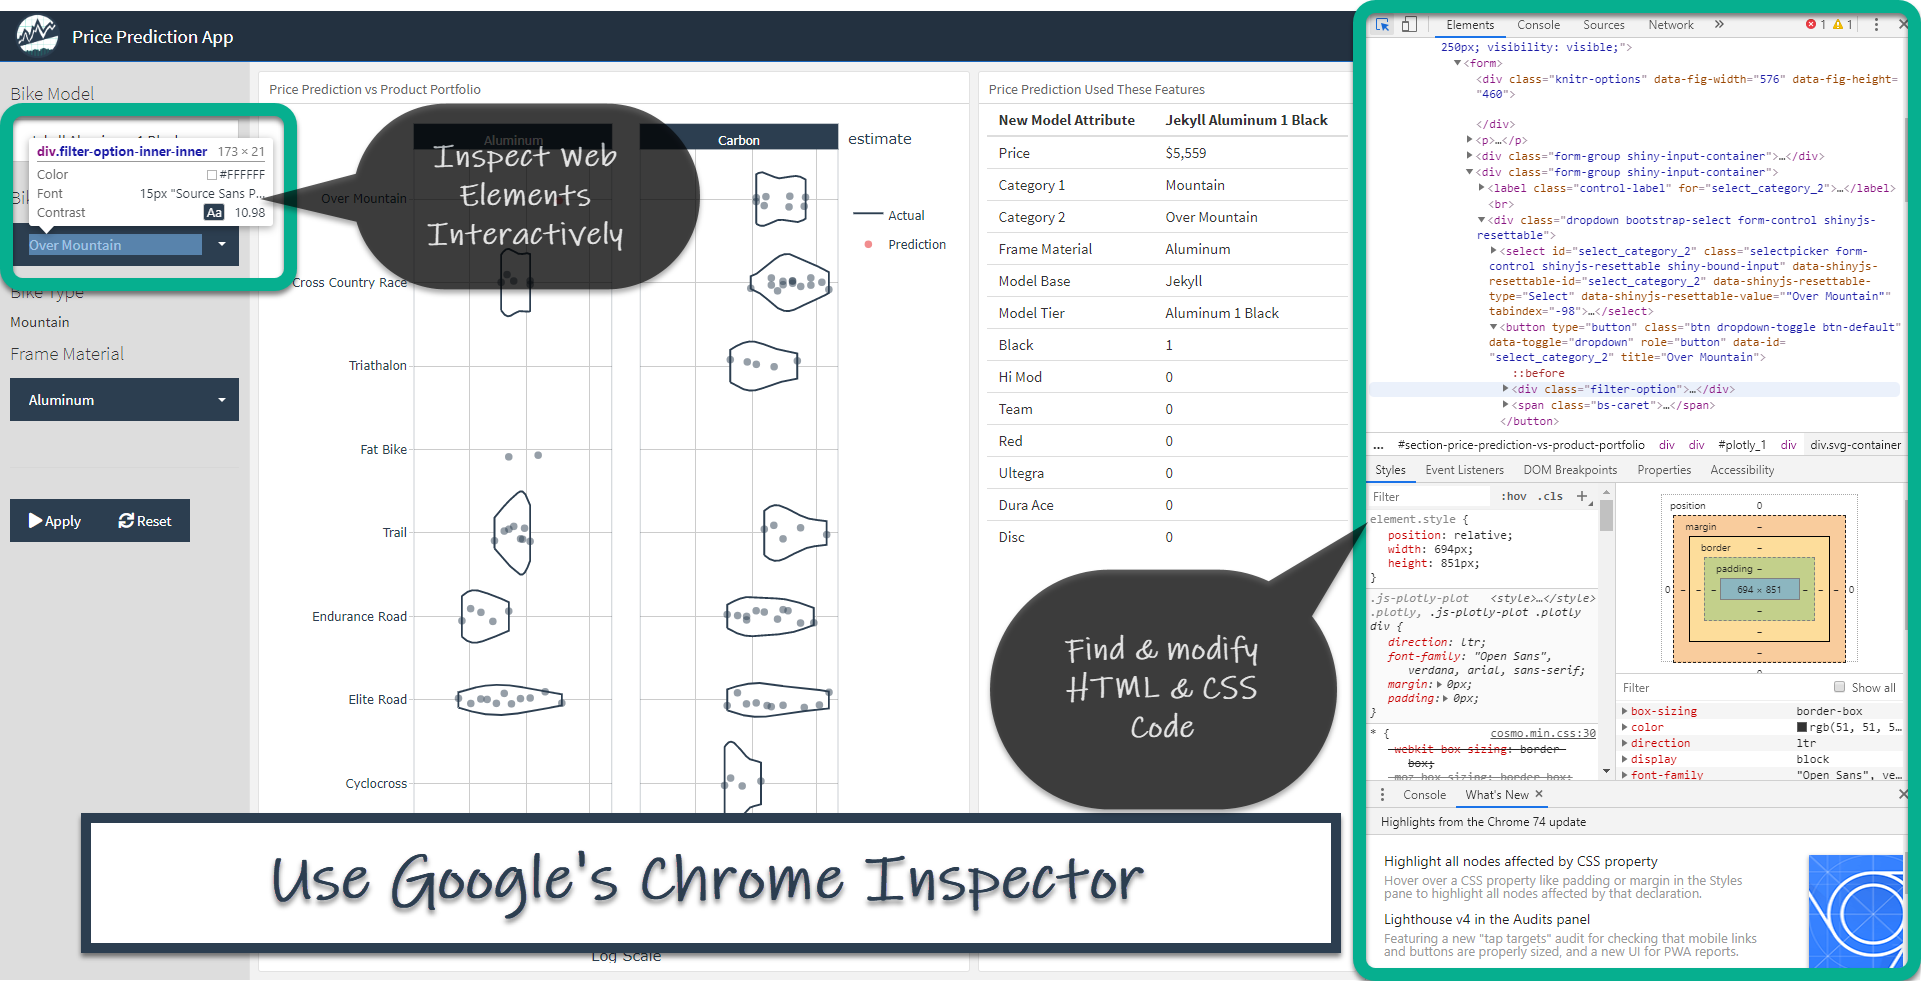 Part 3 - Use Google Chrome Inspector